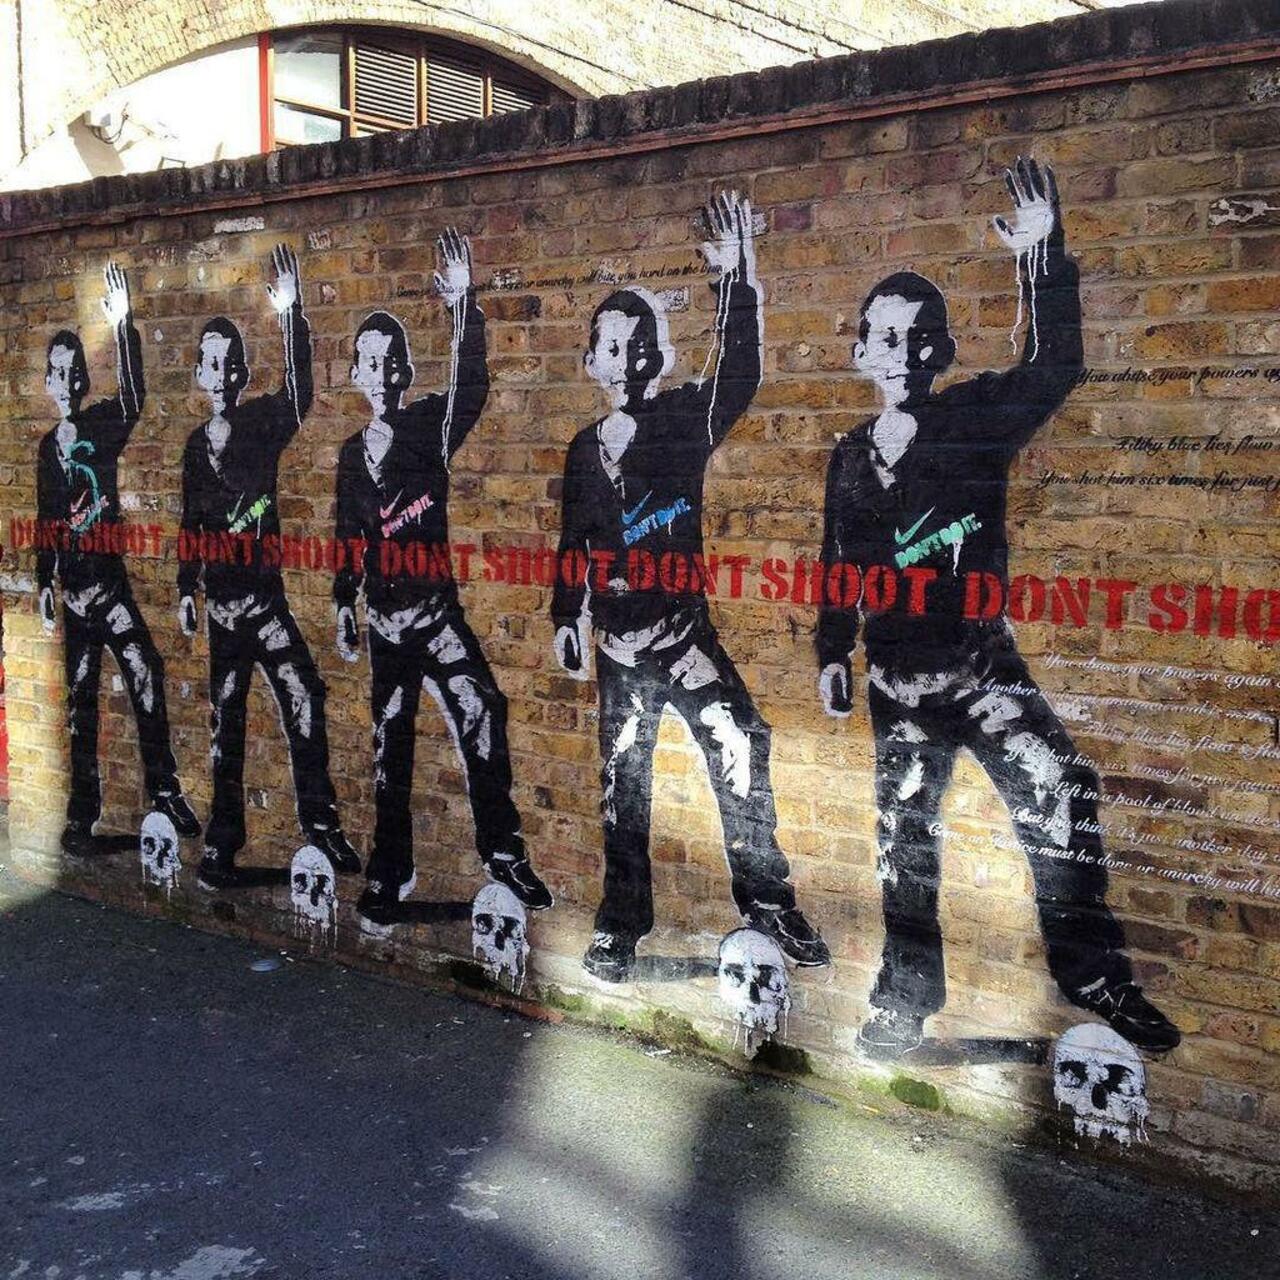 #streetart #streetartlondon #graffiti #london #thisislondon by isadarko http://t.co/LQStzz7naj